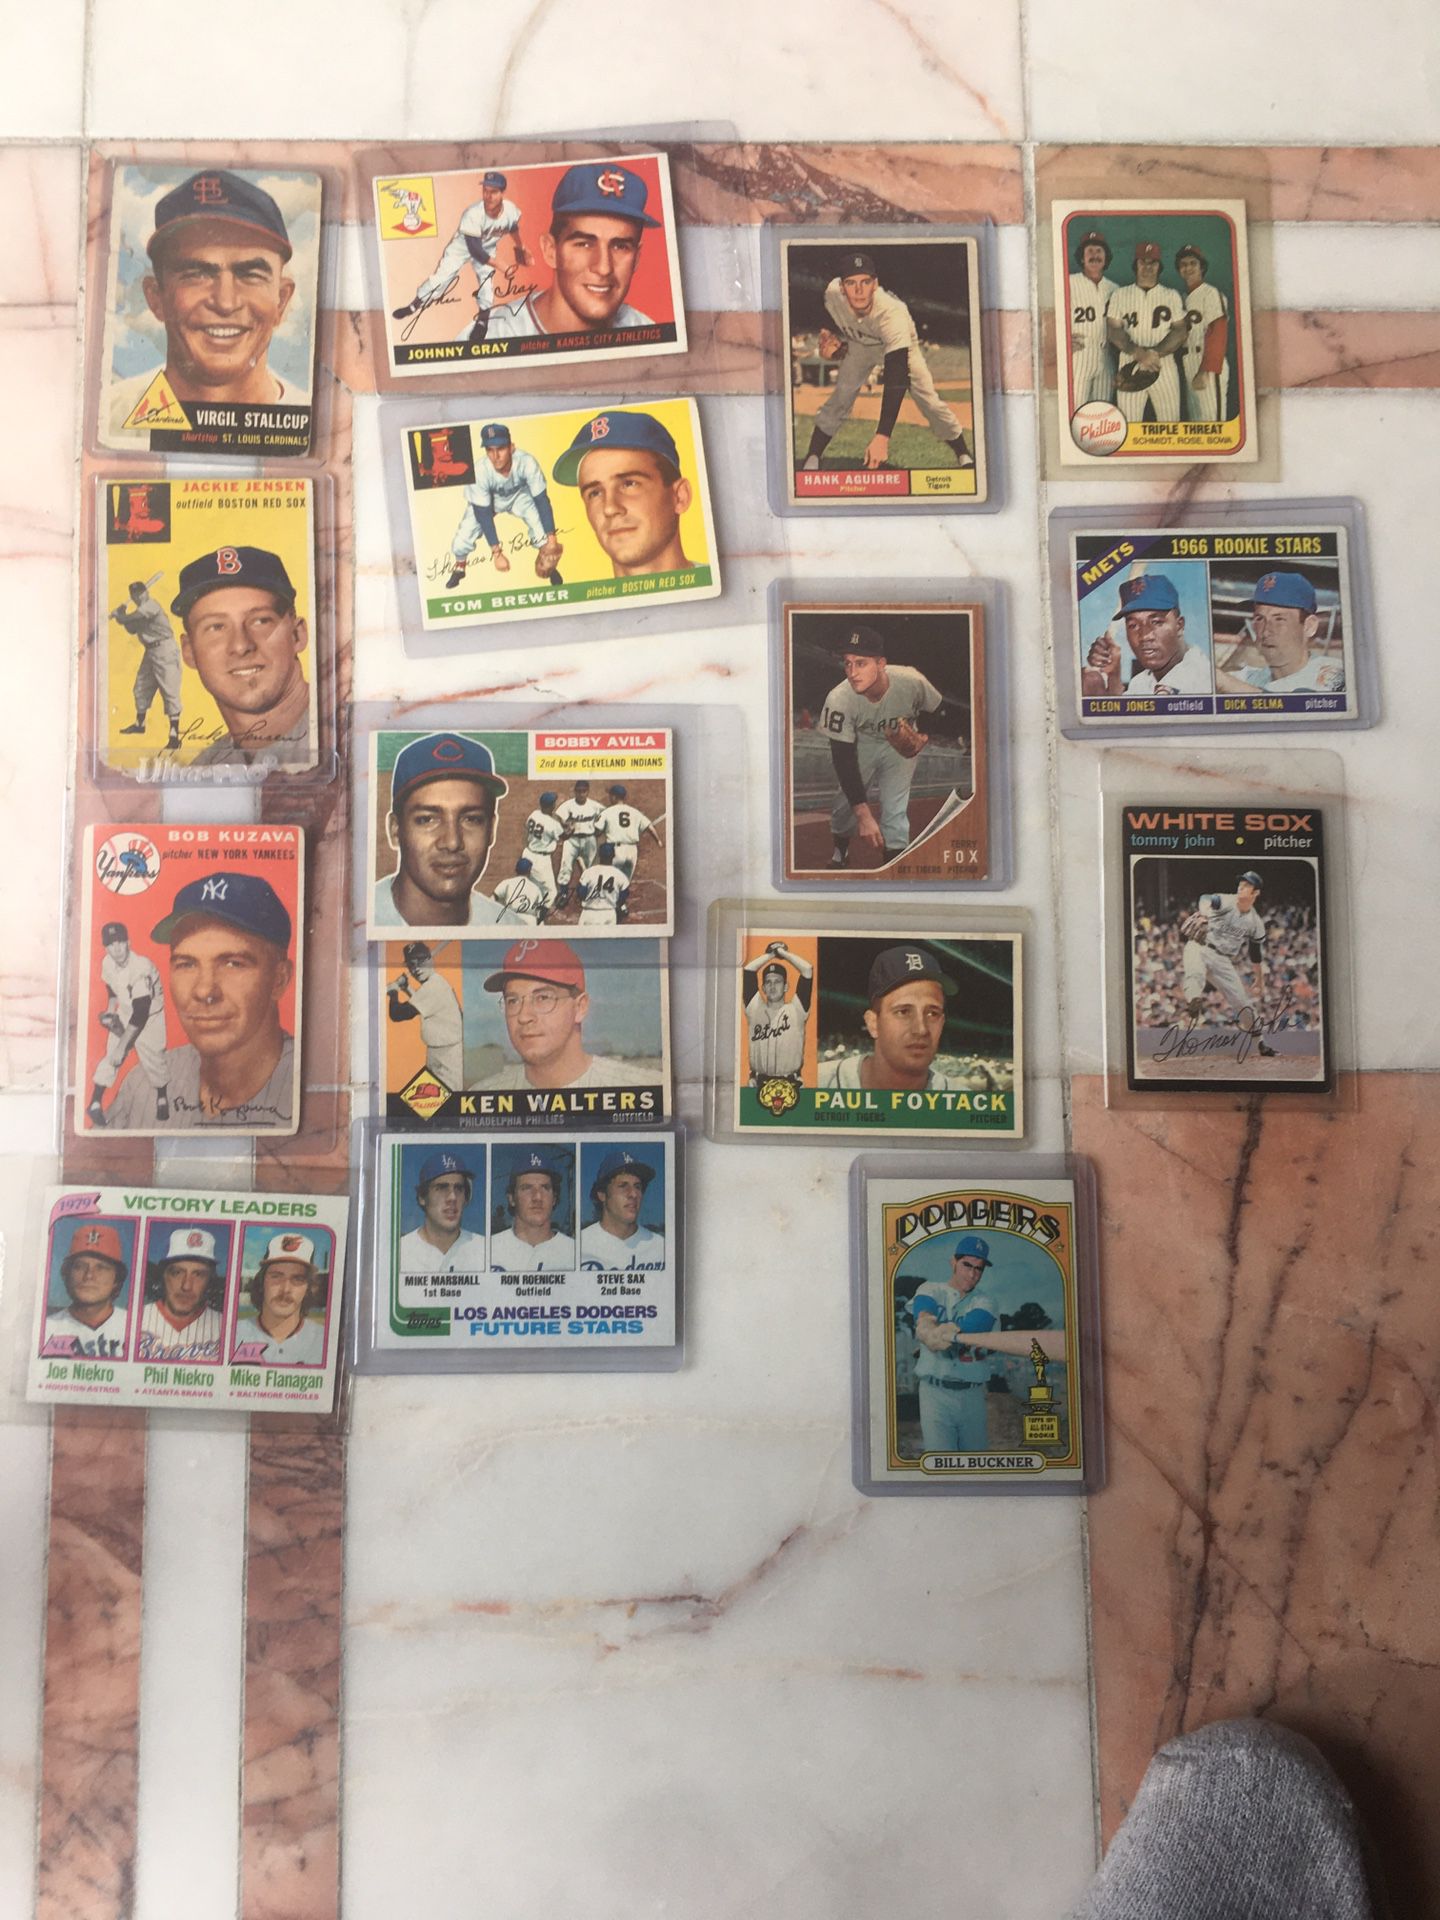 1959 and 60s vintage baseball cards rose -John